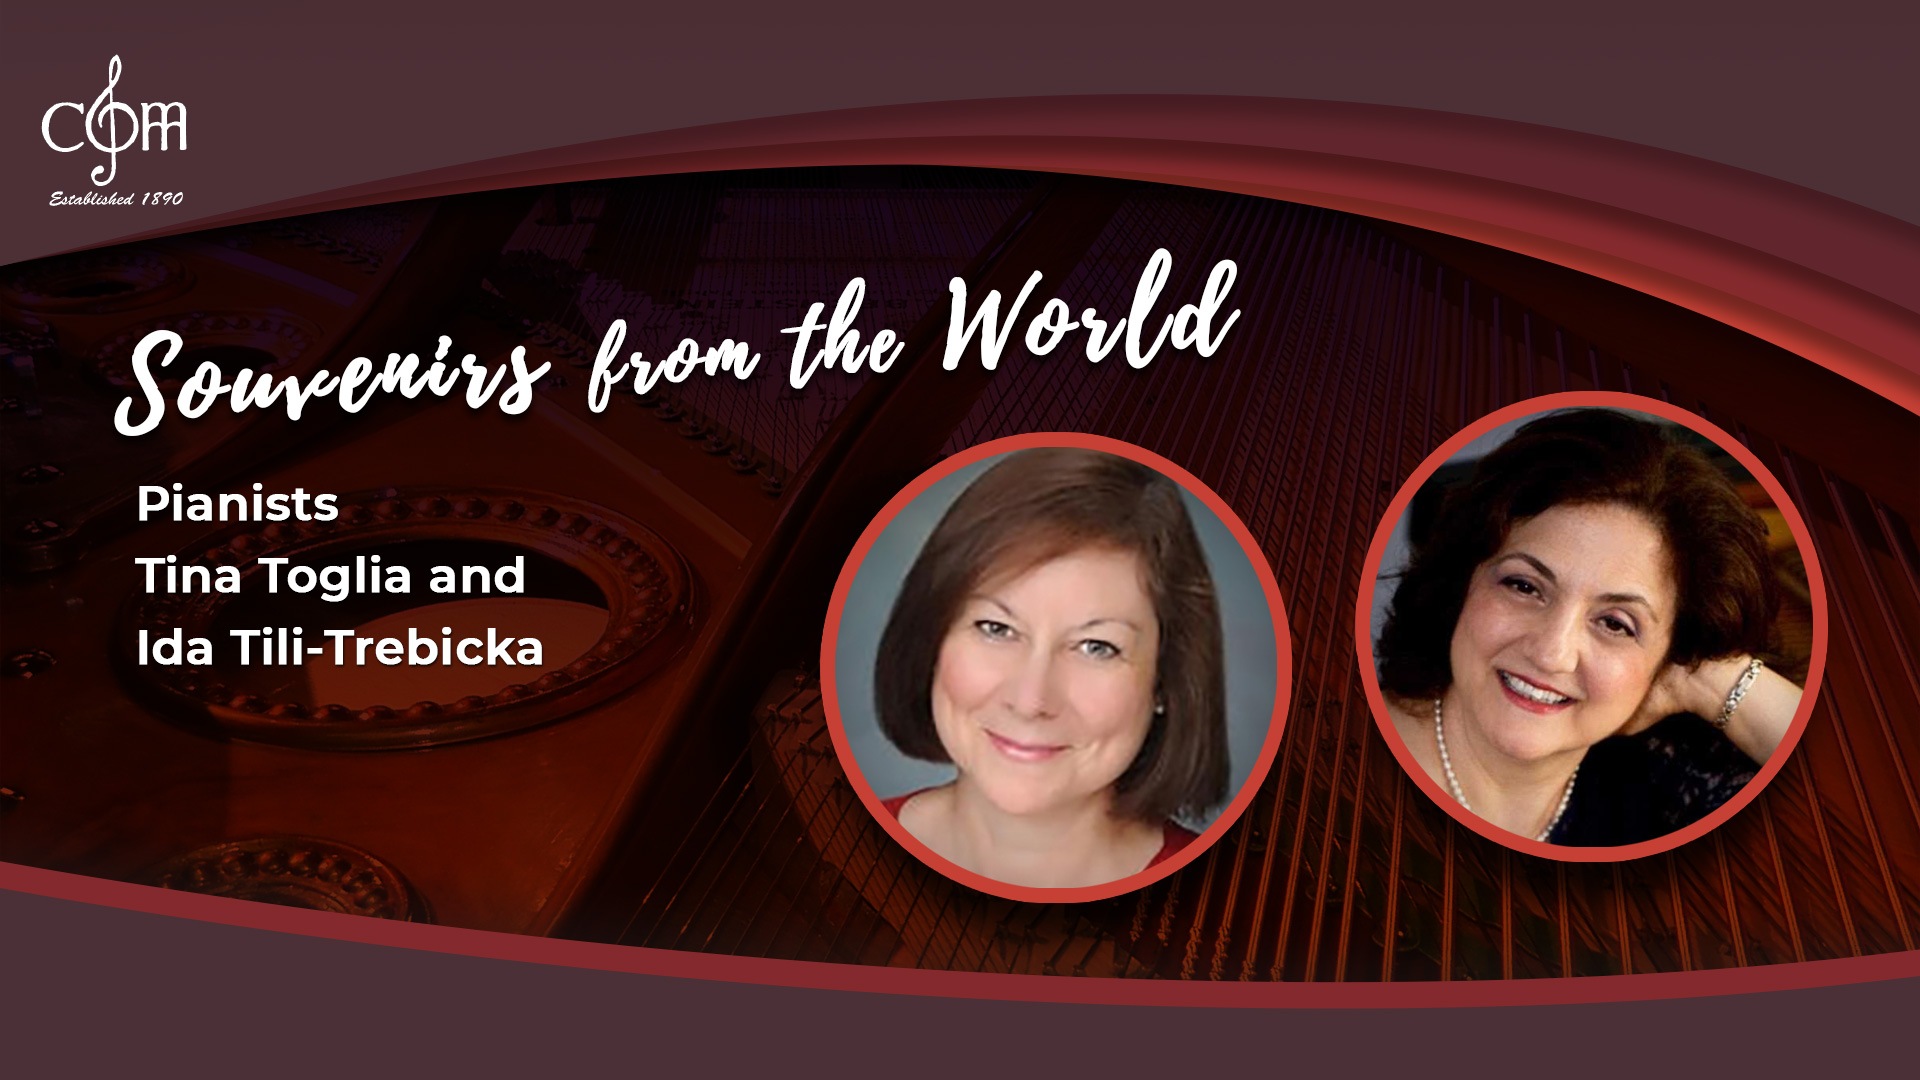 CMM Live! “Souvenirs from the World” with pianists Tina Toglia & Ida Tili-Trebicka